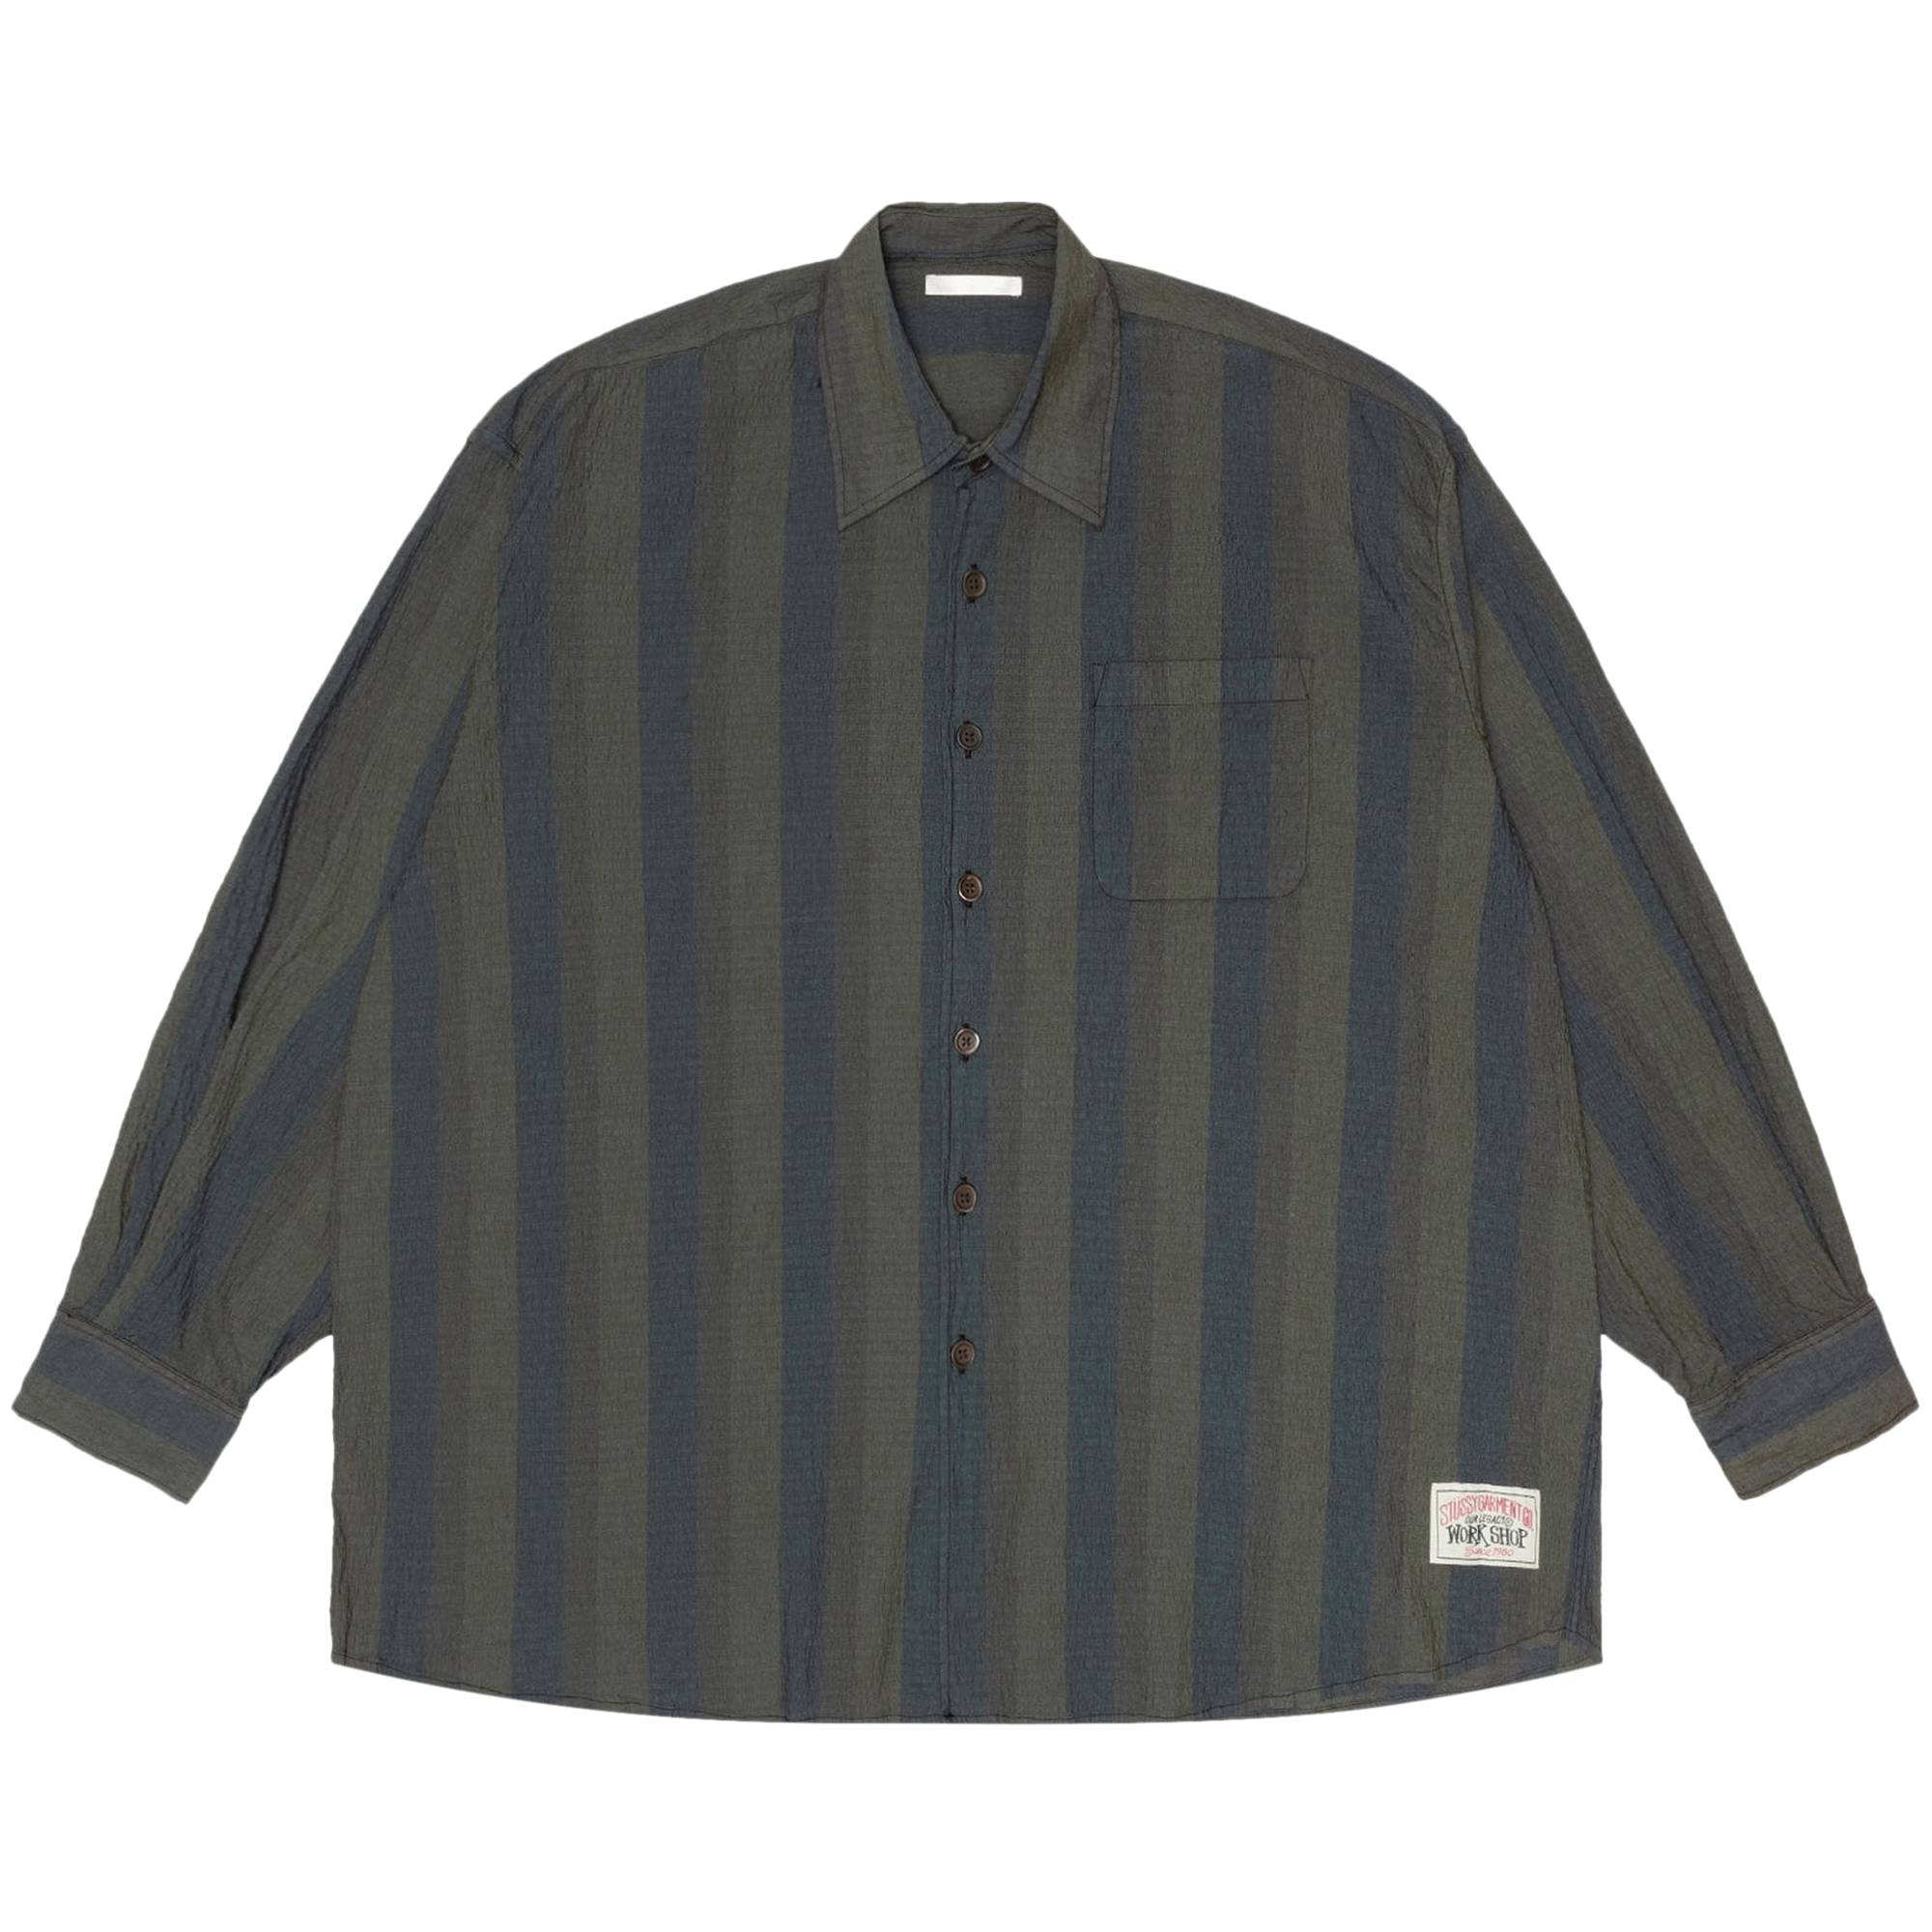 Stussy x Our Legacy Work Shop Borrowed Shirt 'Overdyed Multi Stripe' - 1